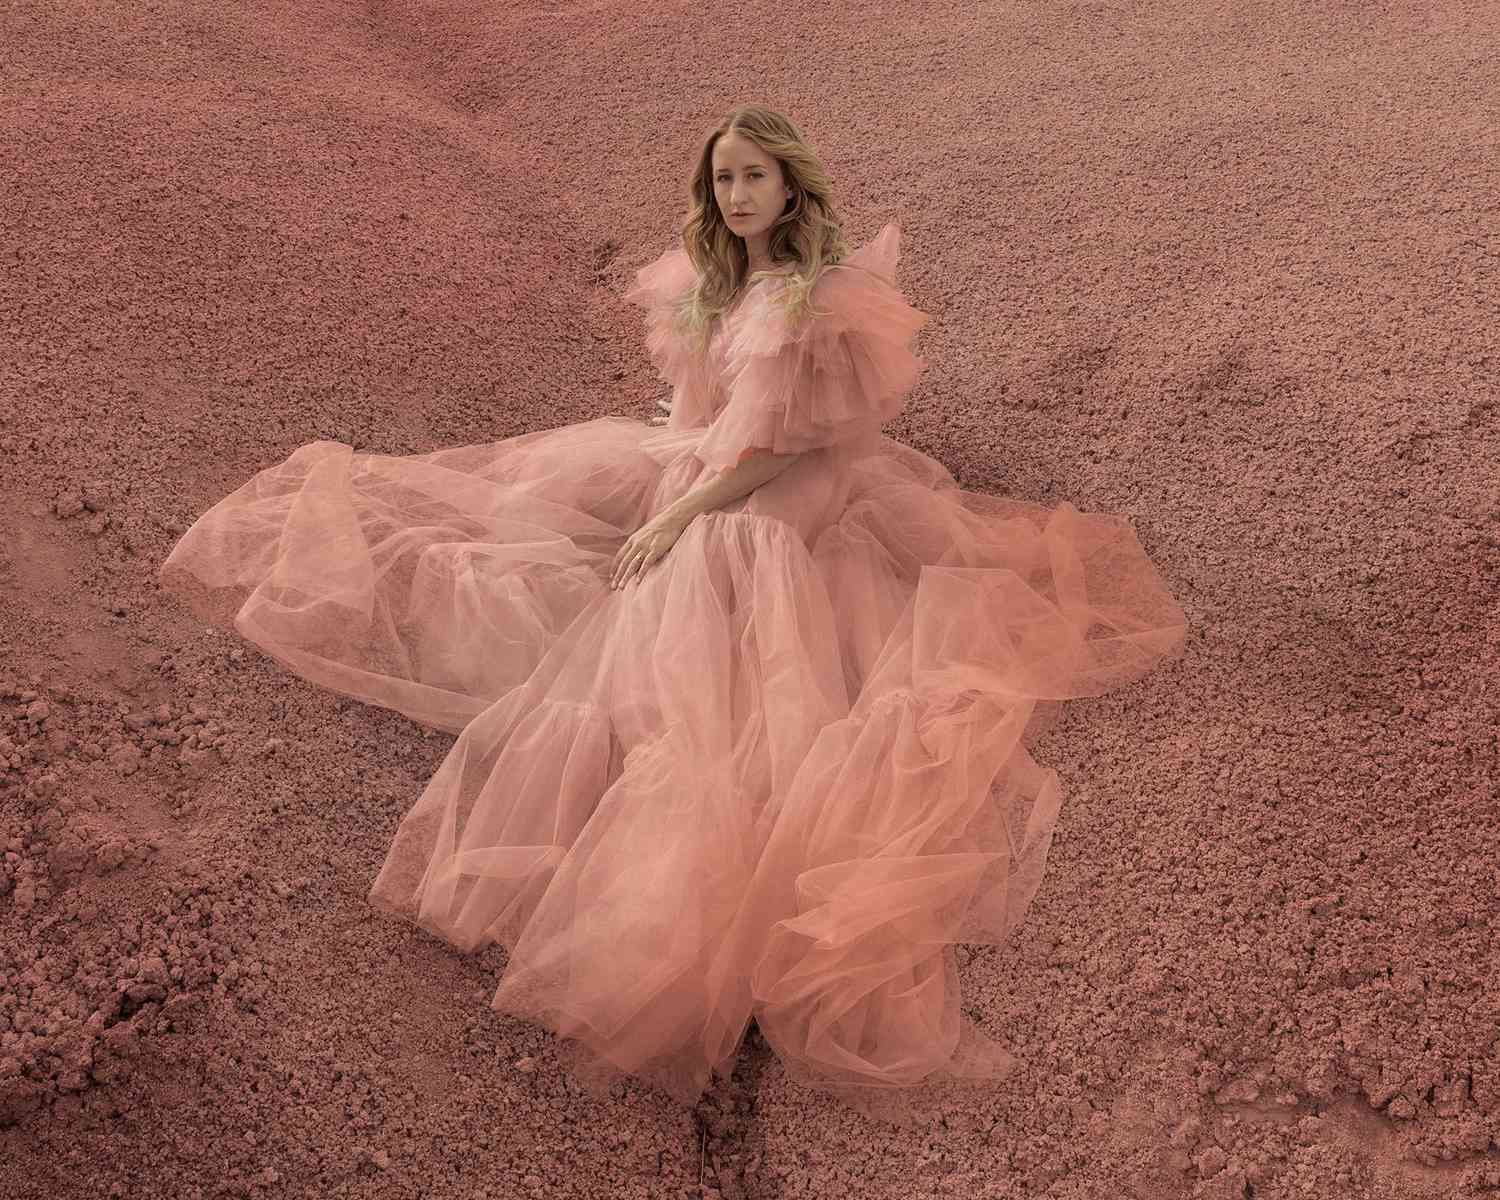 Margot Preço em um vestido rosa de Tule in the Desert.